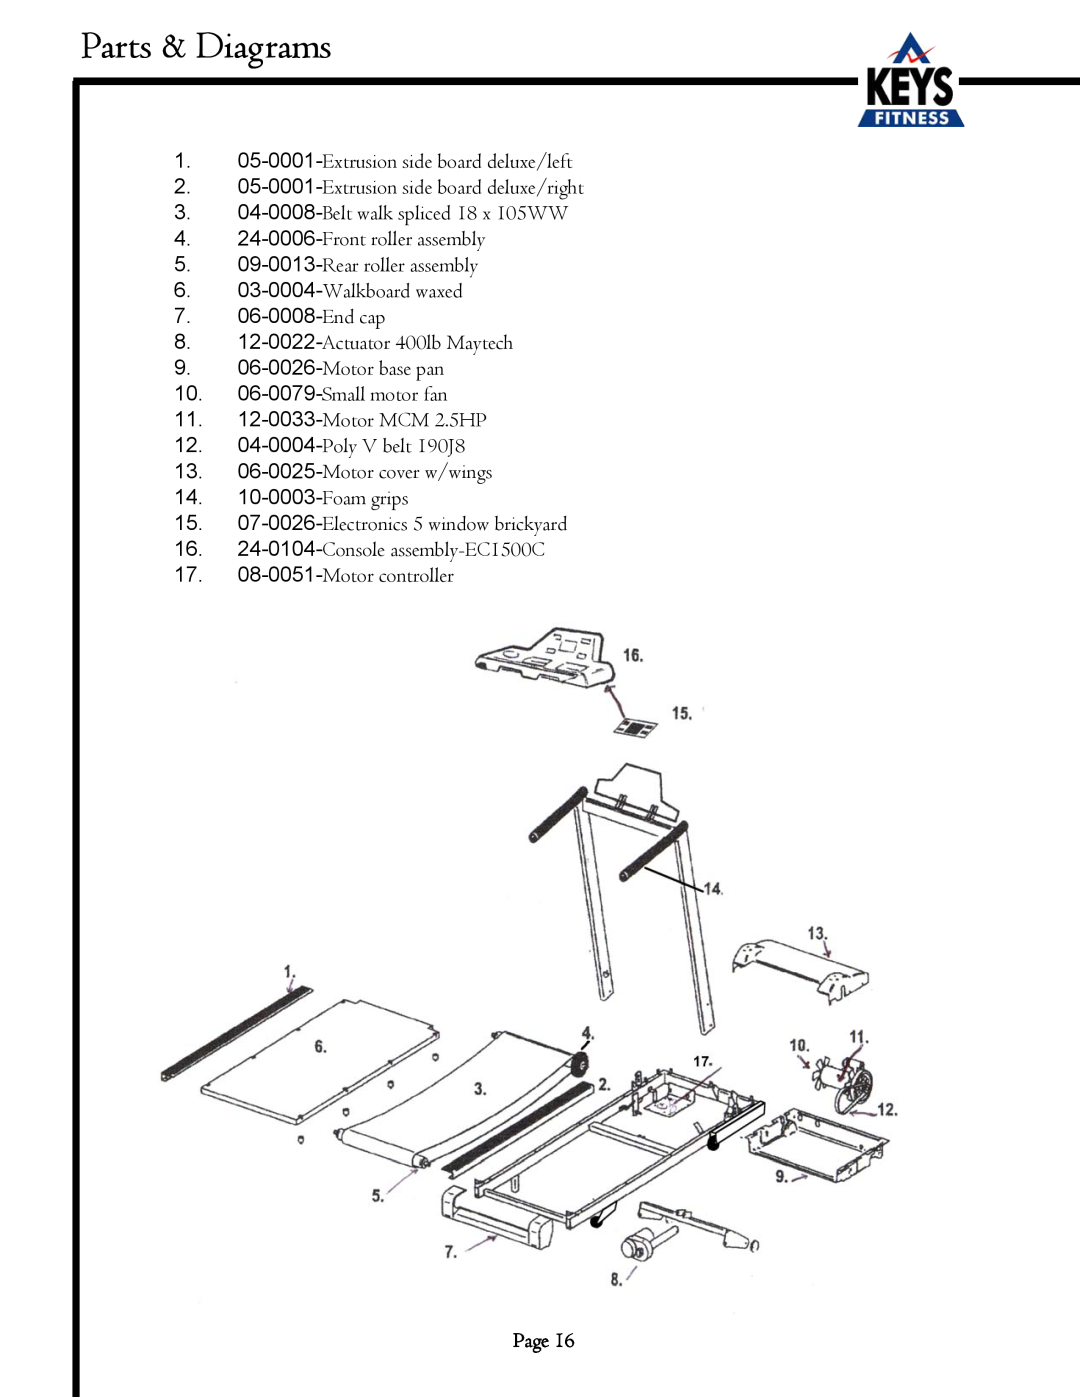 Keys Fitness EC1500-C owner manual Parts & Diagrams, Page 